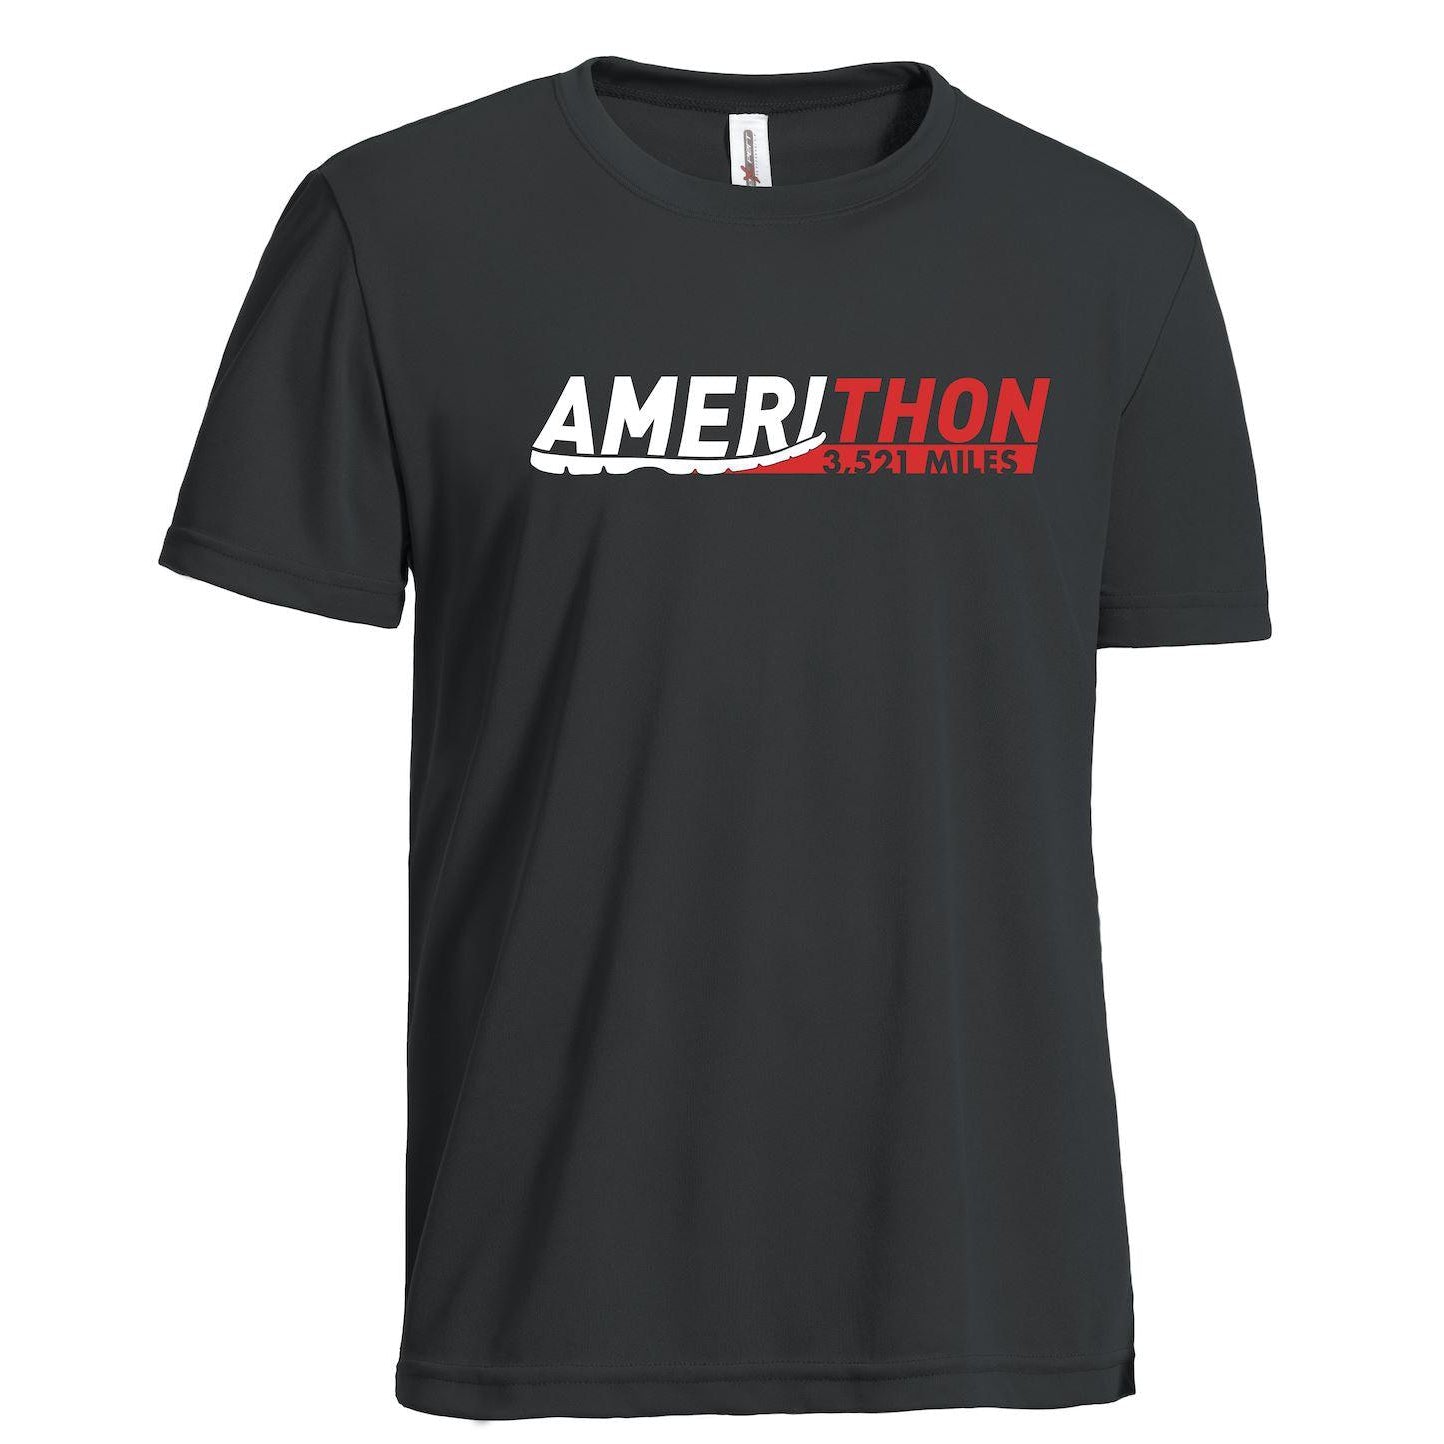 Amerithon Challenge: Get It All Registration Virtual Fitness Challenge Registrations | Run The Edge